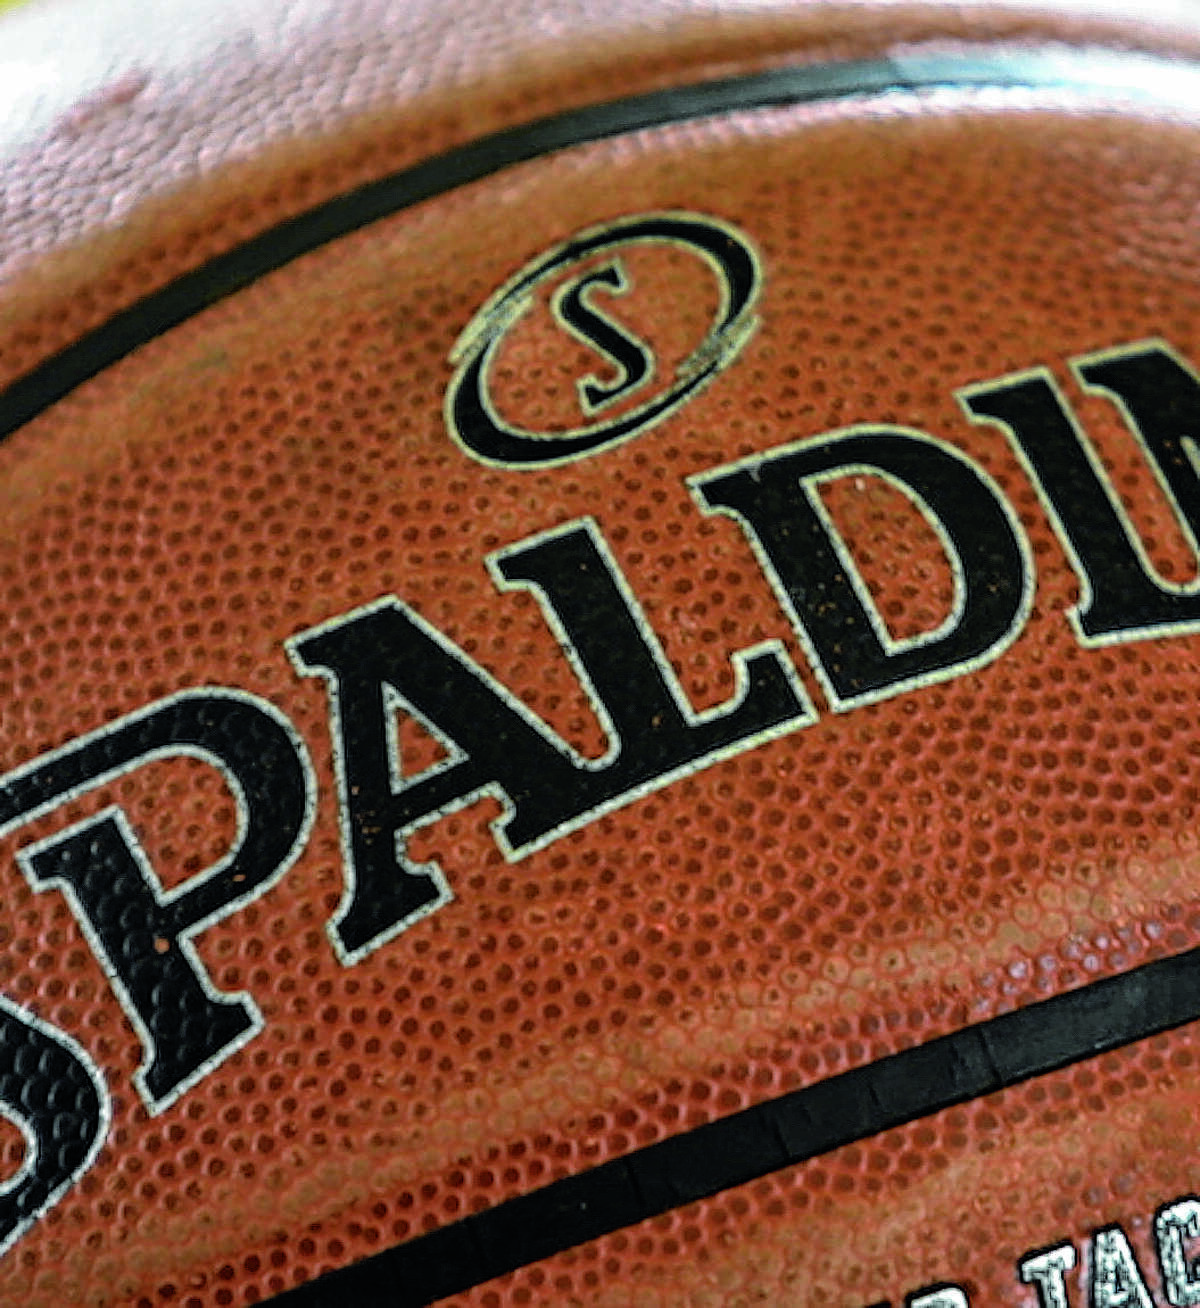 Associated Press boys' basketball rankings released